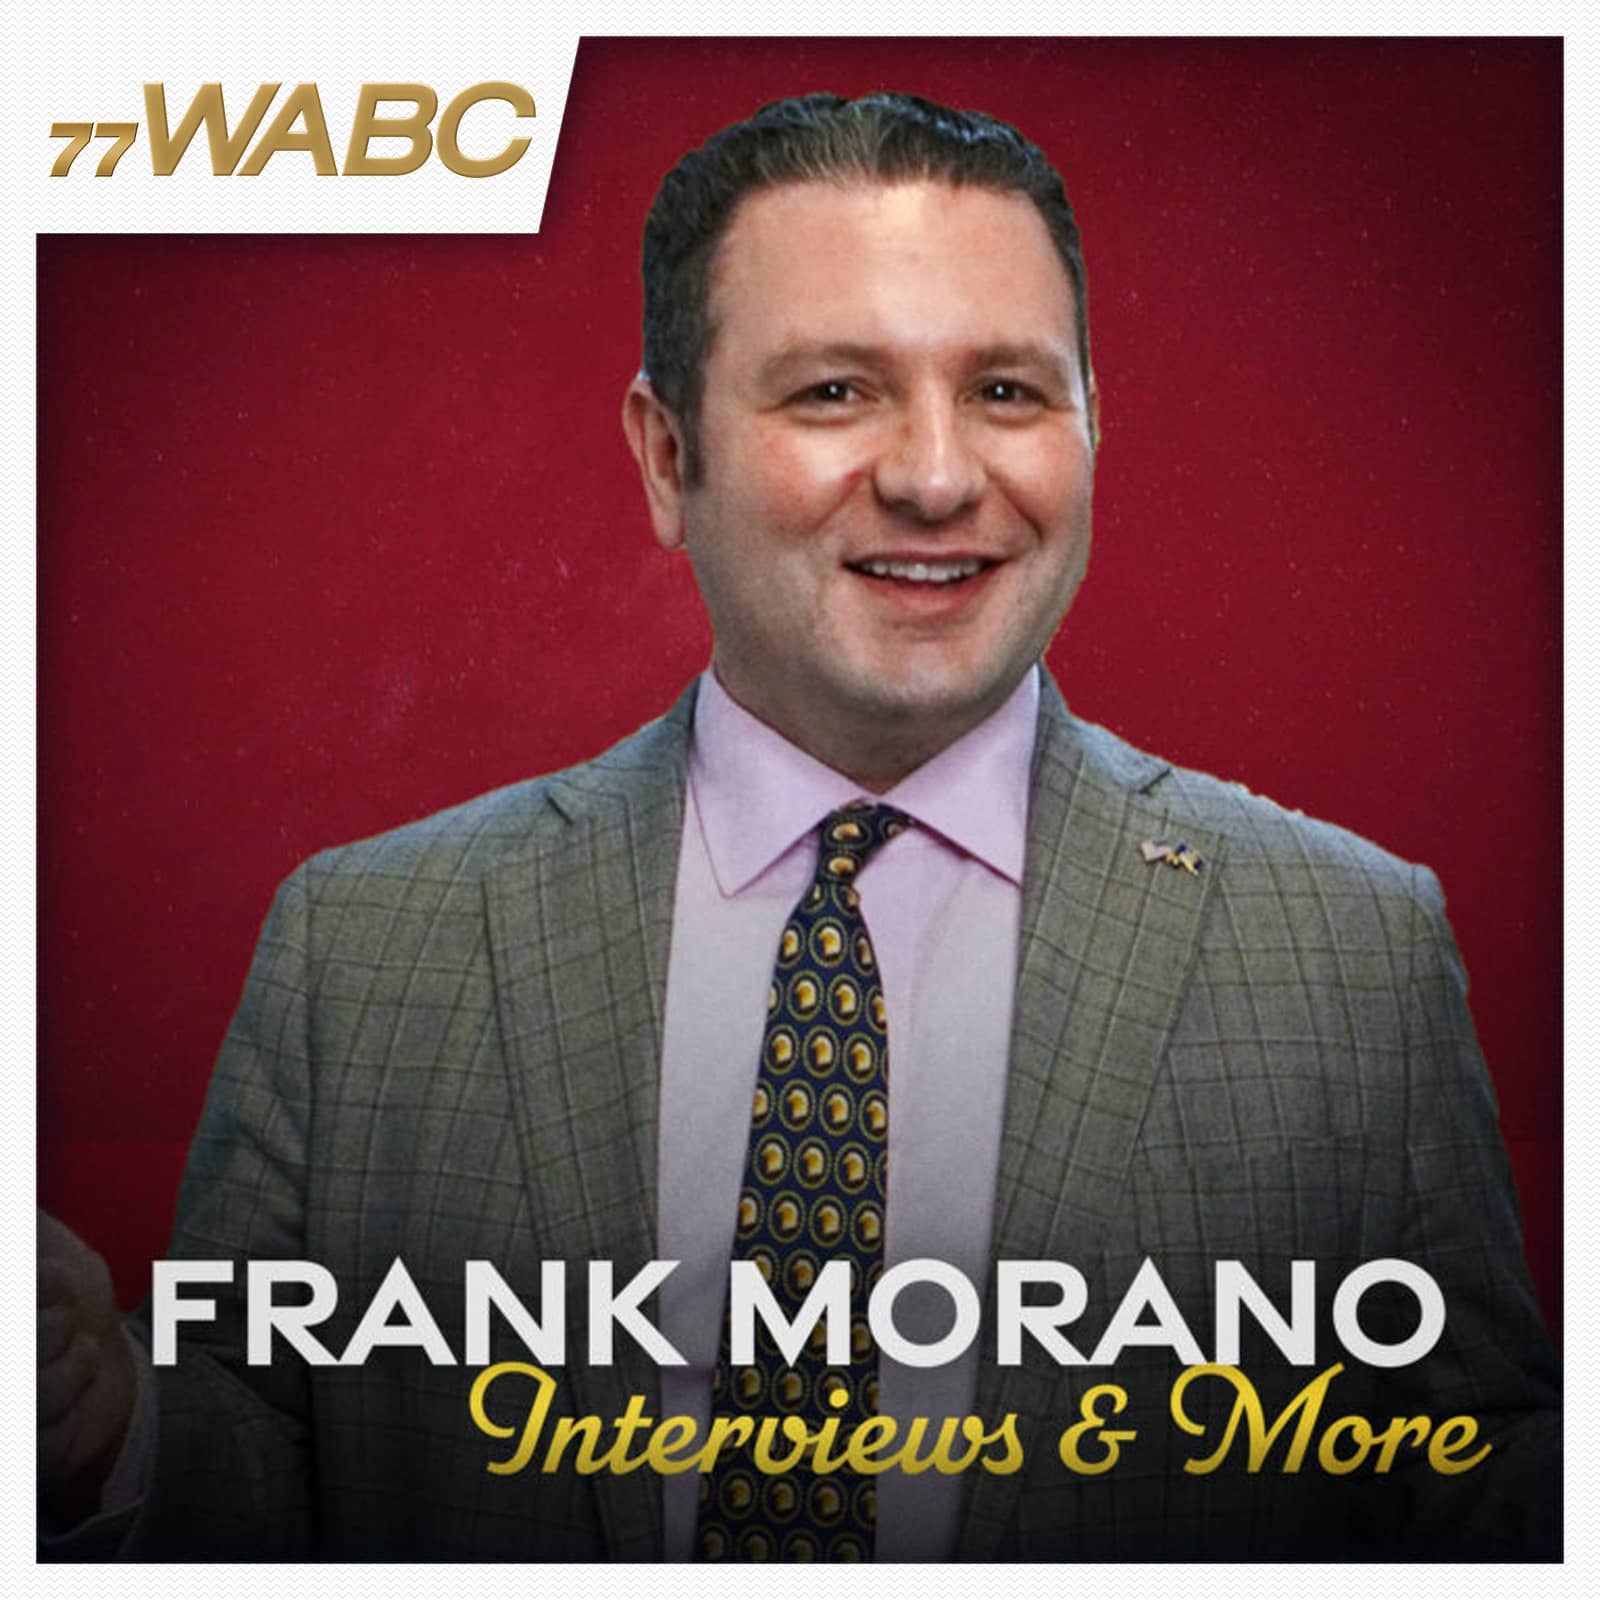 frank-morano-interviews-and-more-podcast-new-logo-333